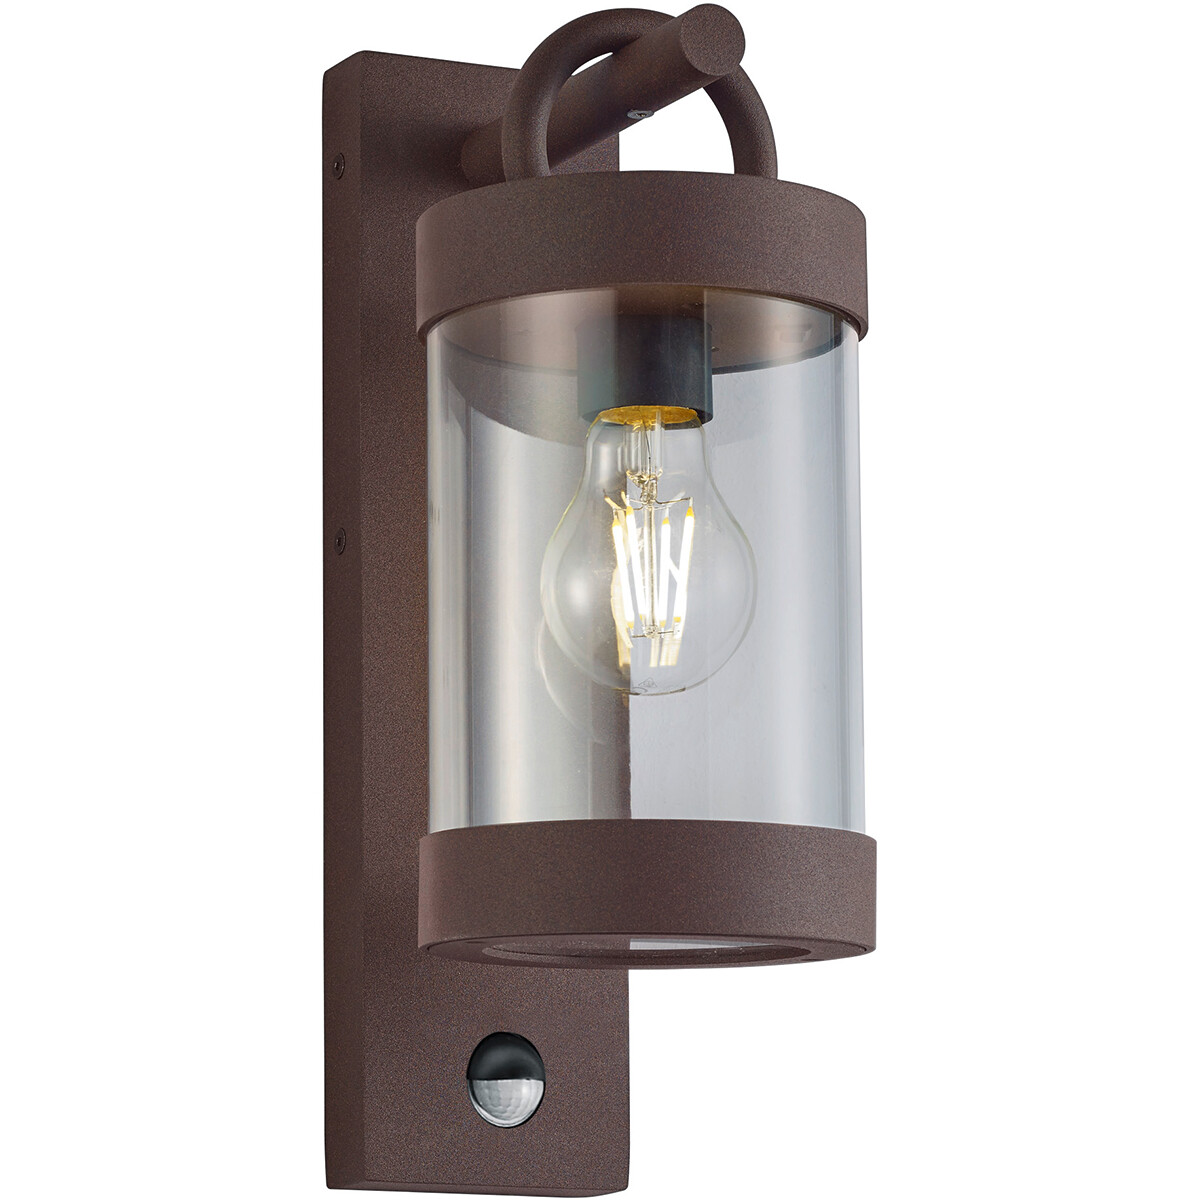 LED Tuinverlichting met Bewegingssensor - Wandlamp Buitenlamp - Trion Semby - E27 Fitting - Spatwate